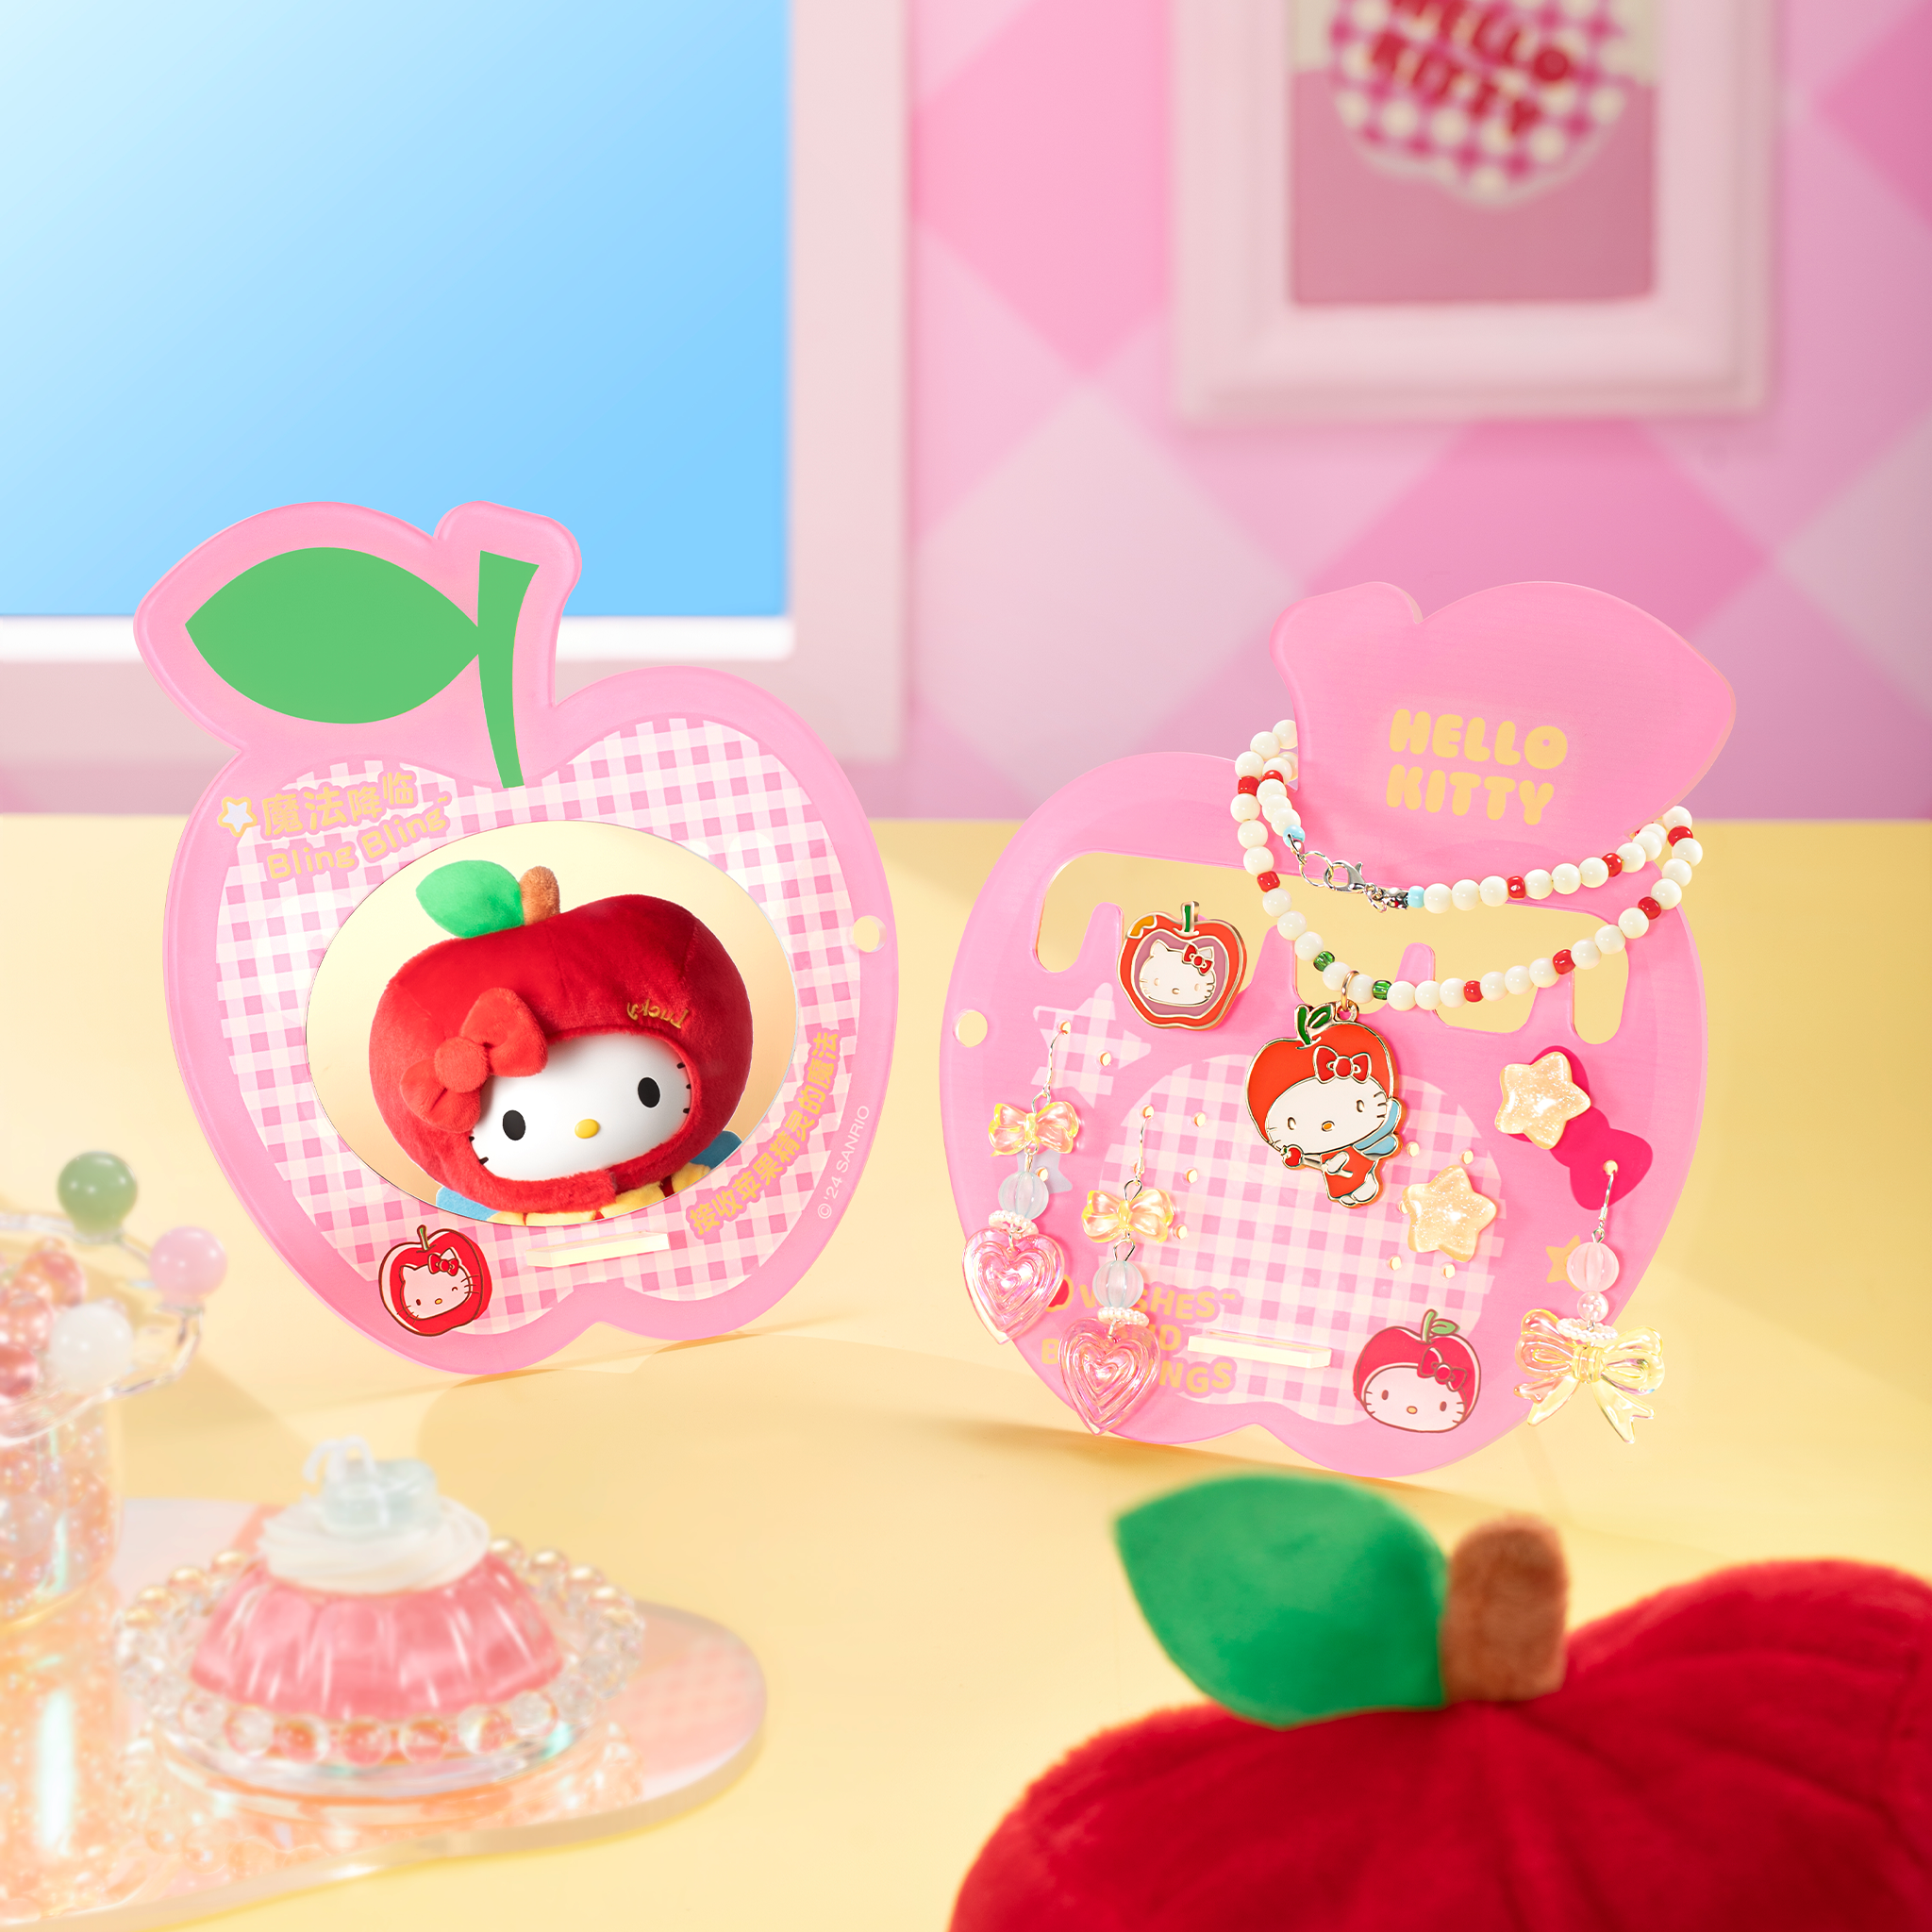 MarTUBE x Sanrio Hello Kitty Apple Fairy Jewelry Gift Set for Girl